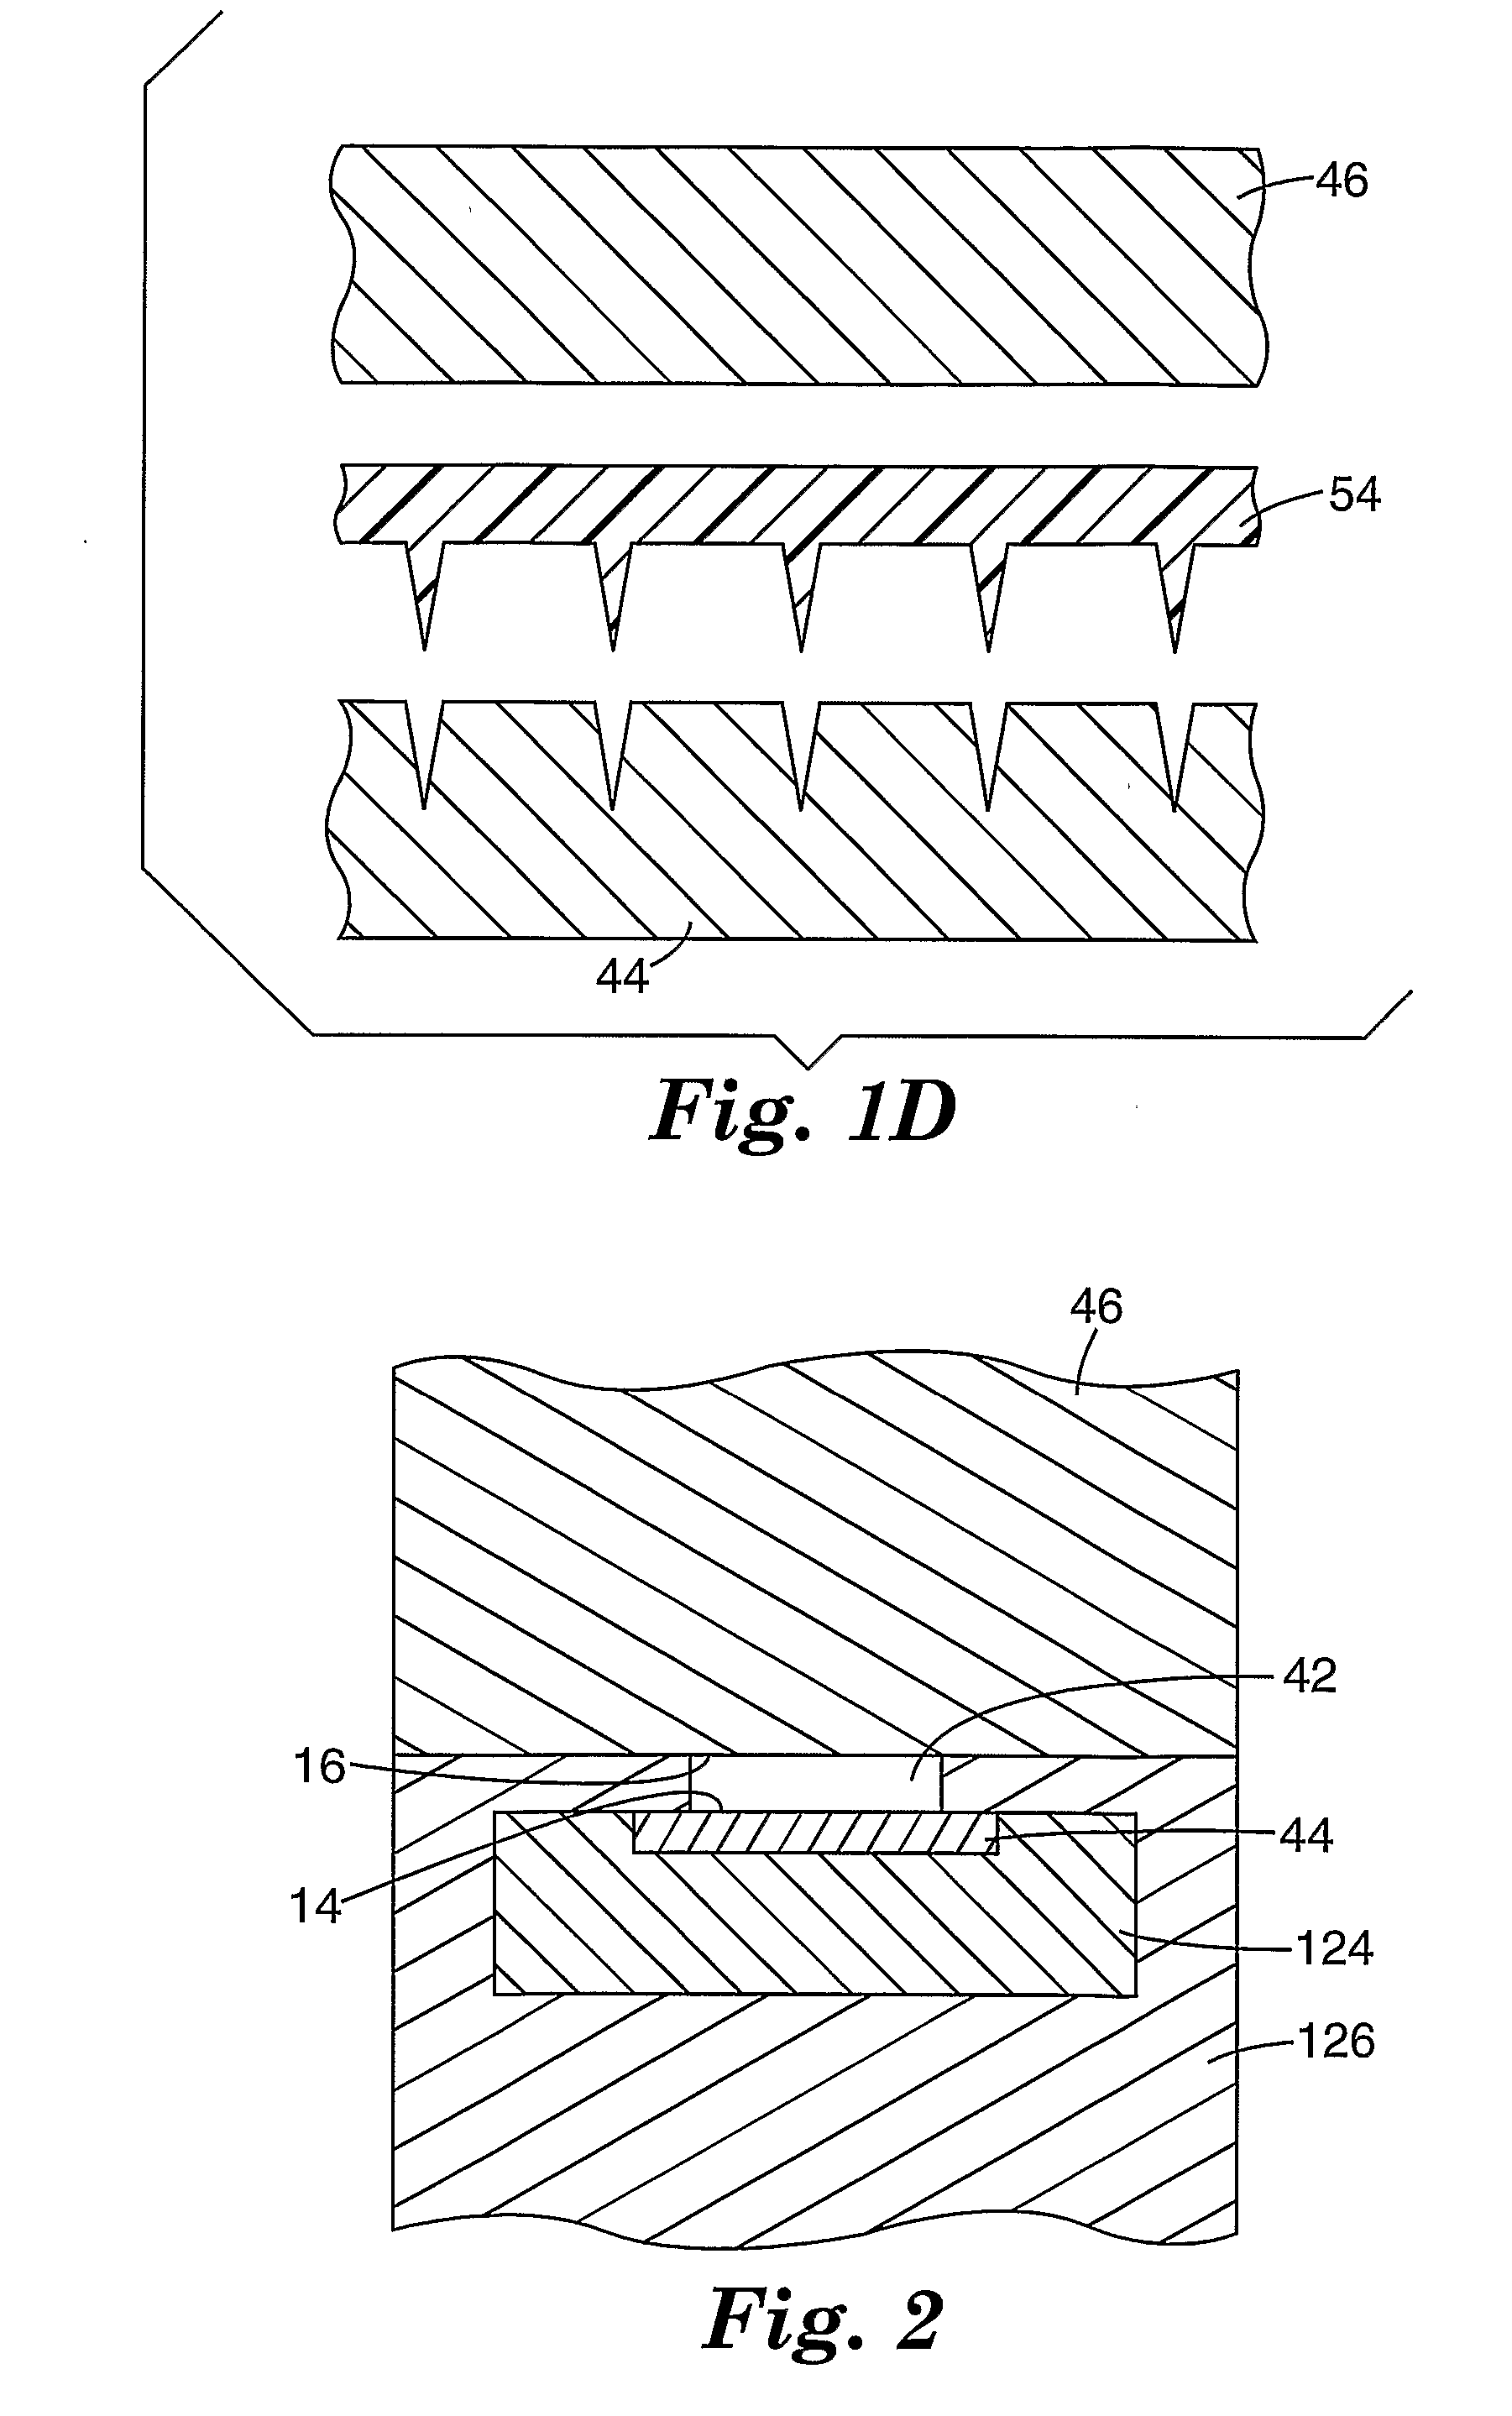 Method of molding for microneedle arrays